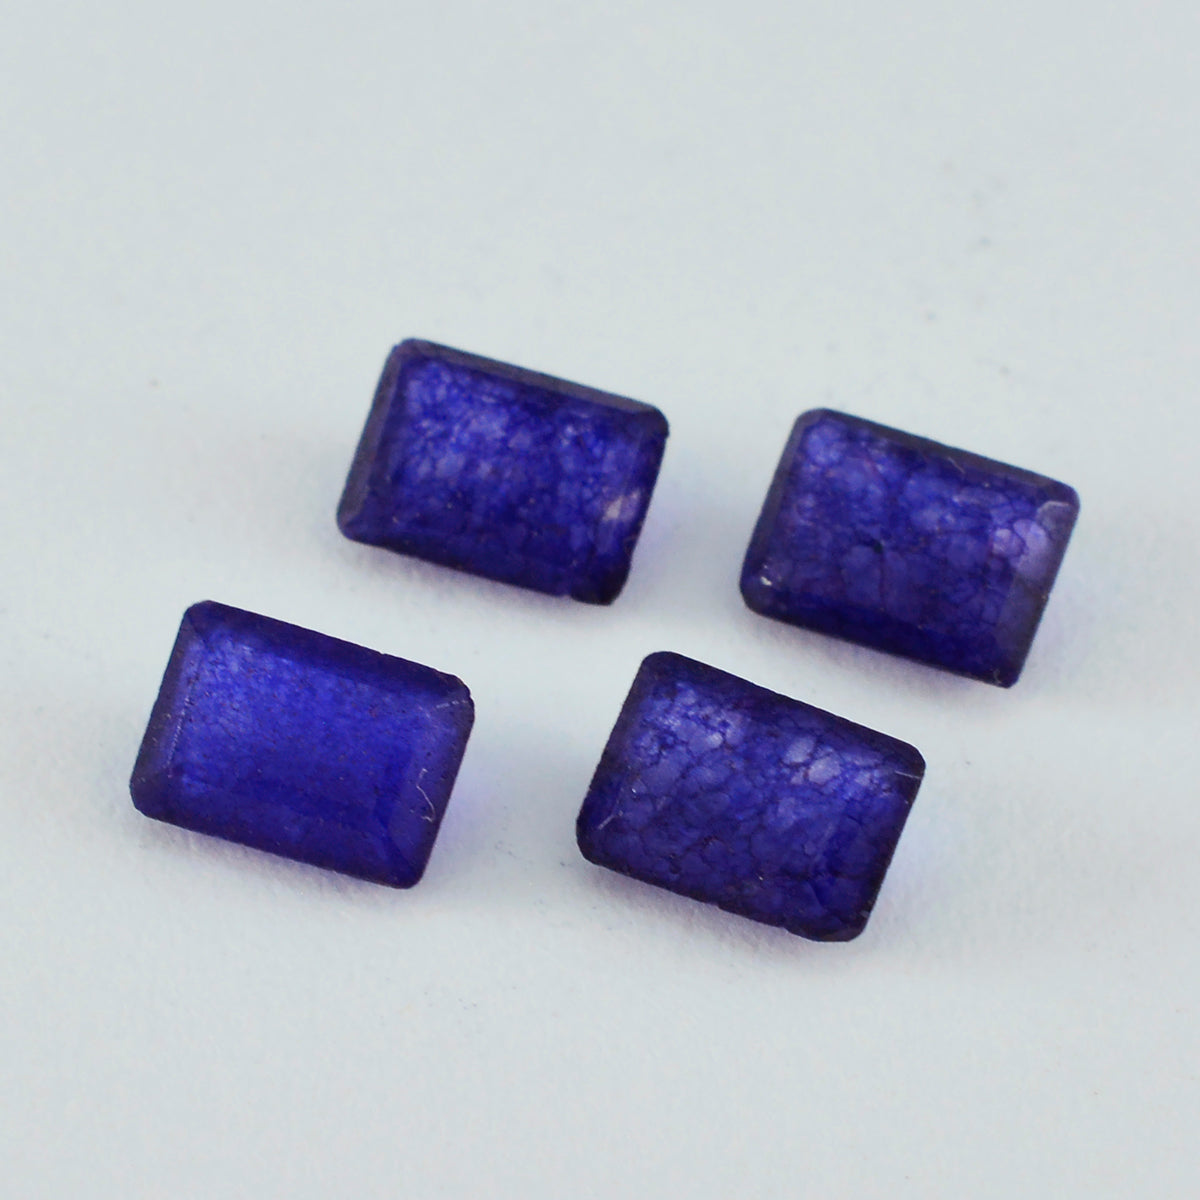 Riyogems 1PC Genuine Blue Jasper Faceted 6x8 mm Octagon Shape good-looking Quality Loose Gemstone